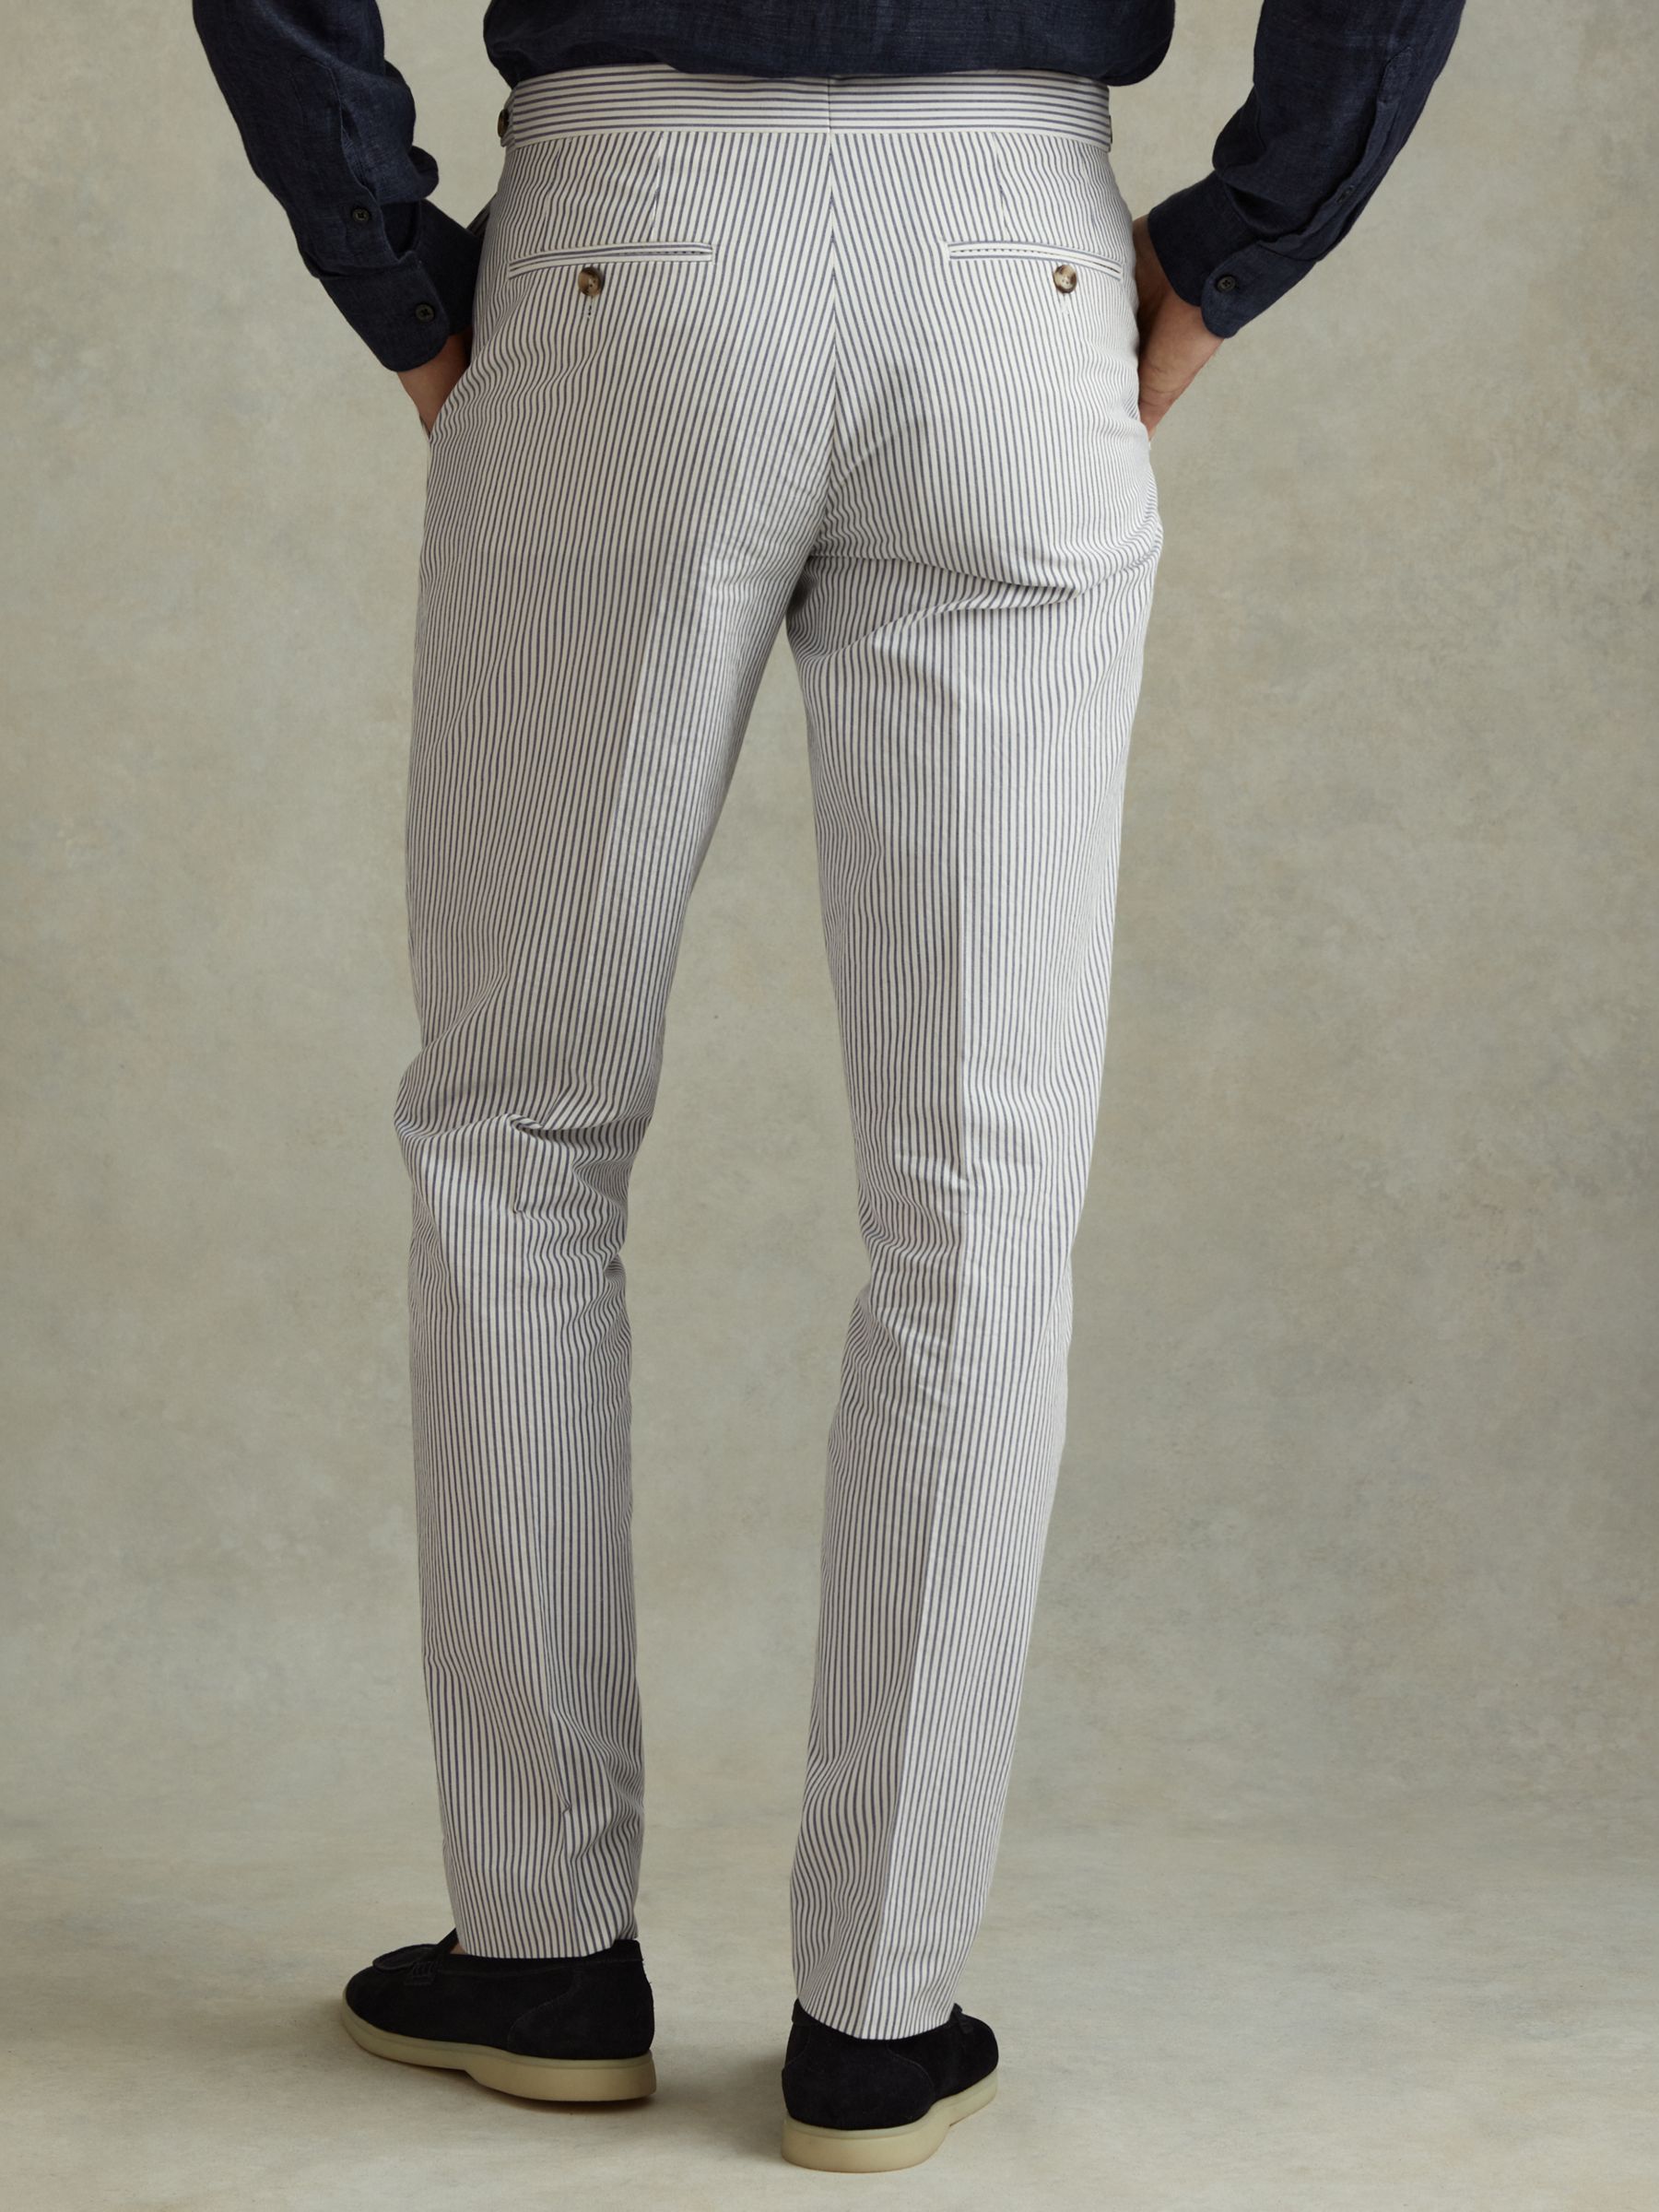 Reiss Barr Stripe Straight Leg Suit Trousers, Soft Blue/White, 28R